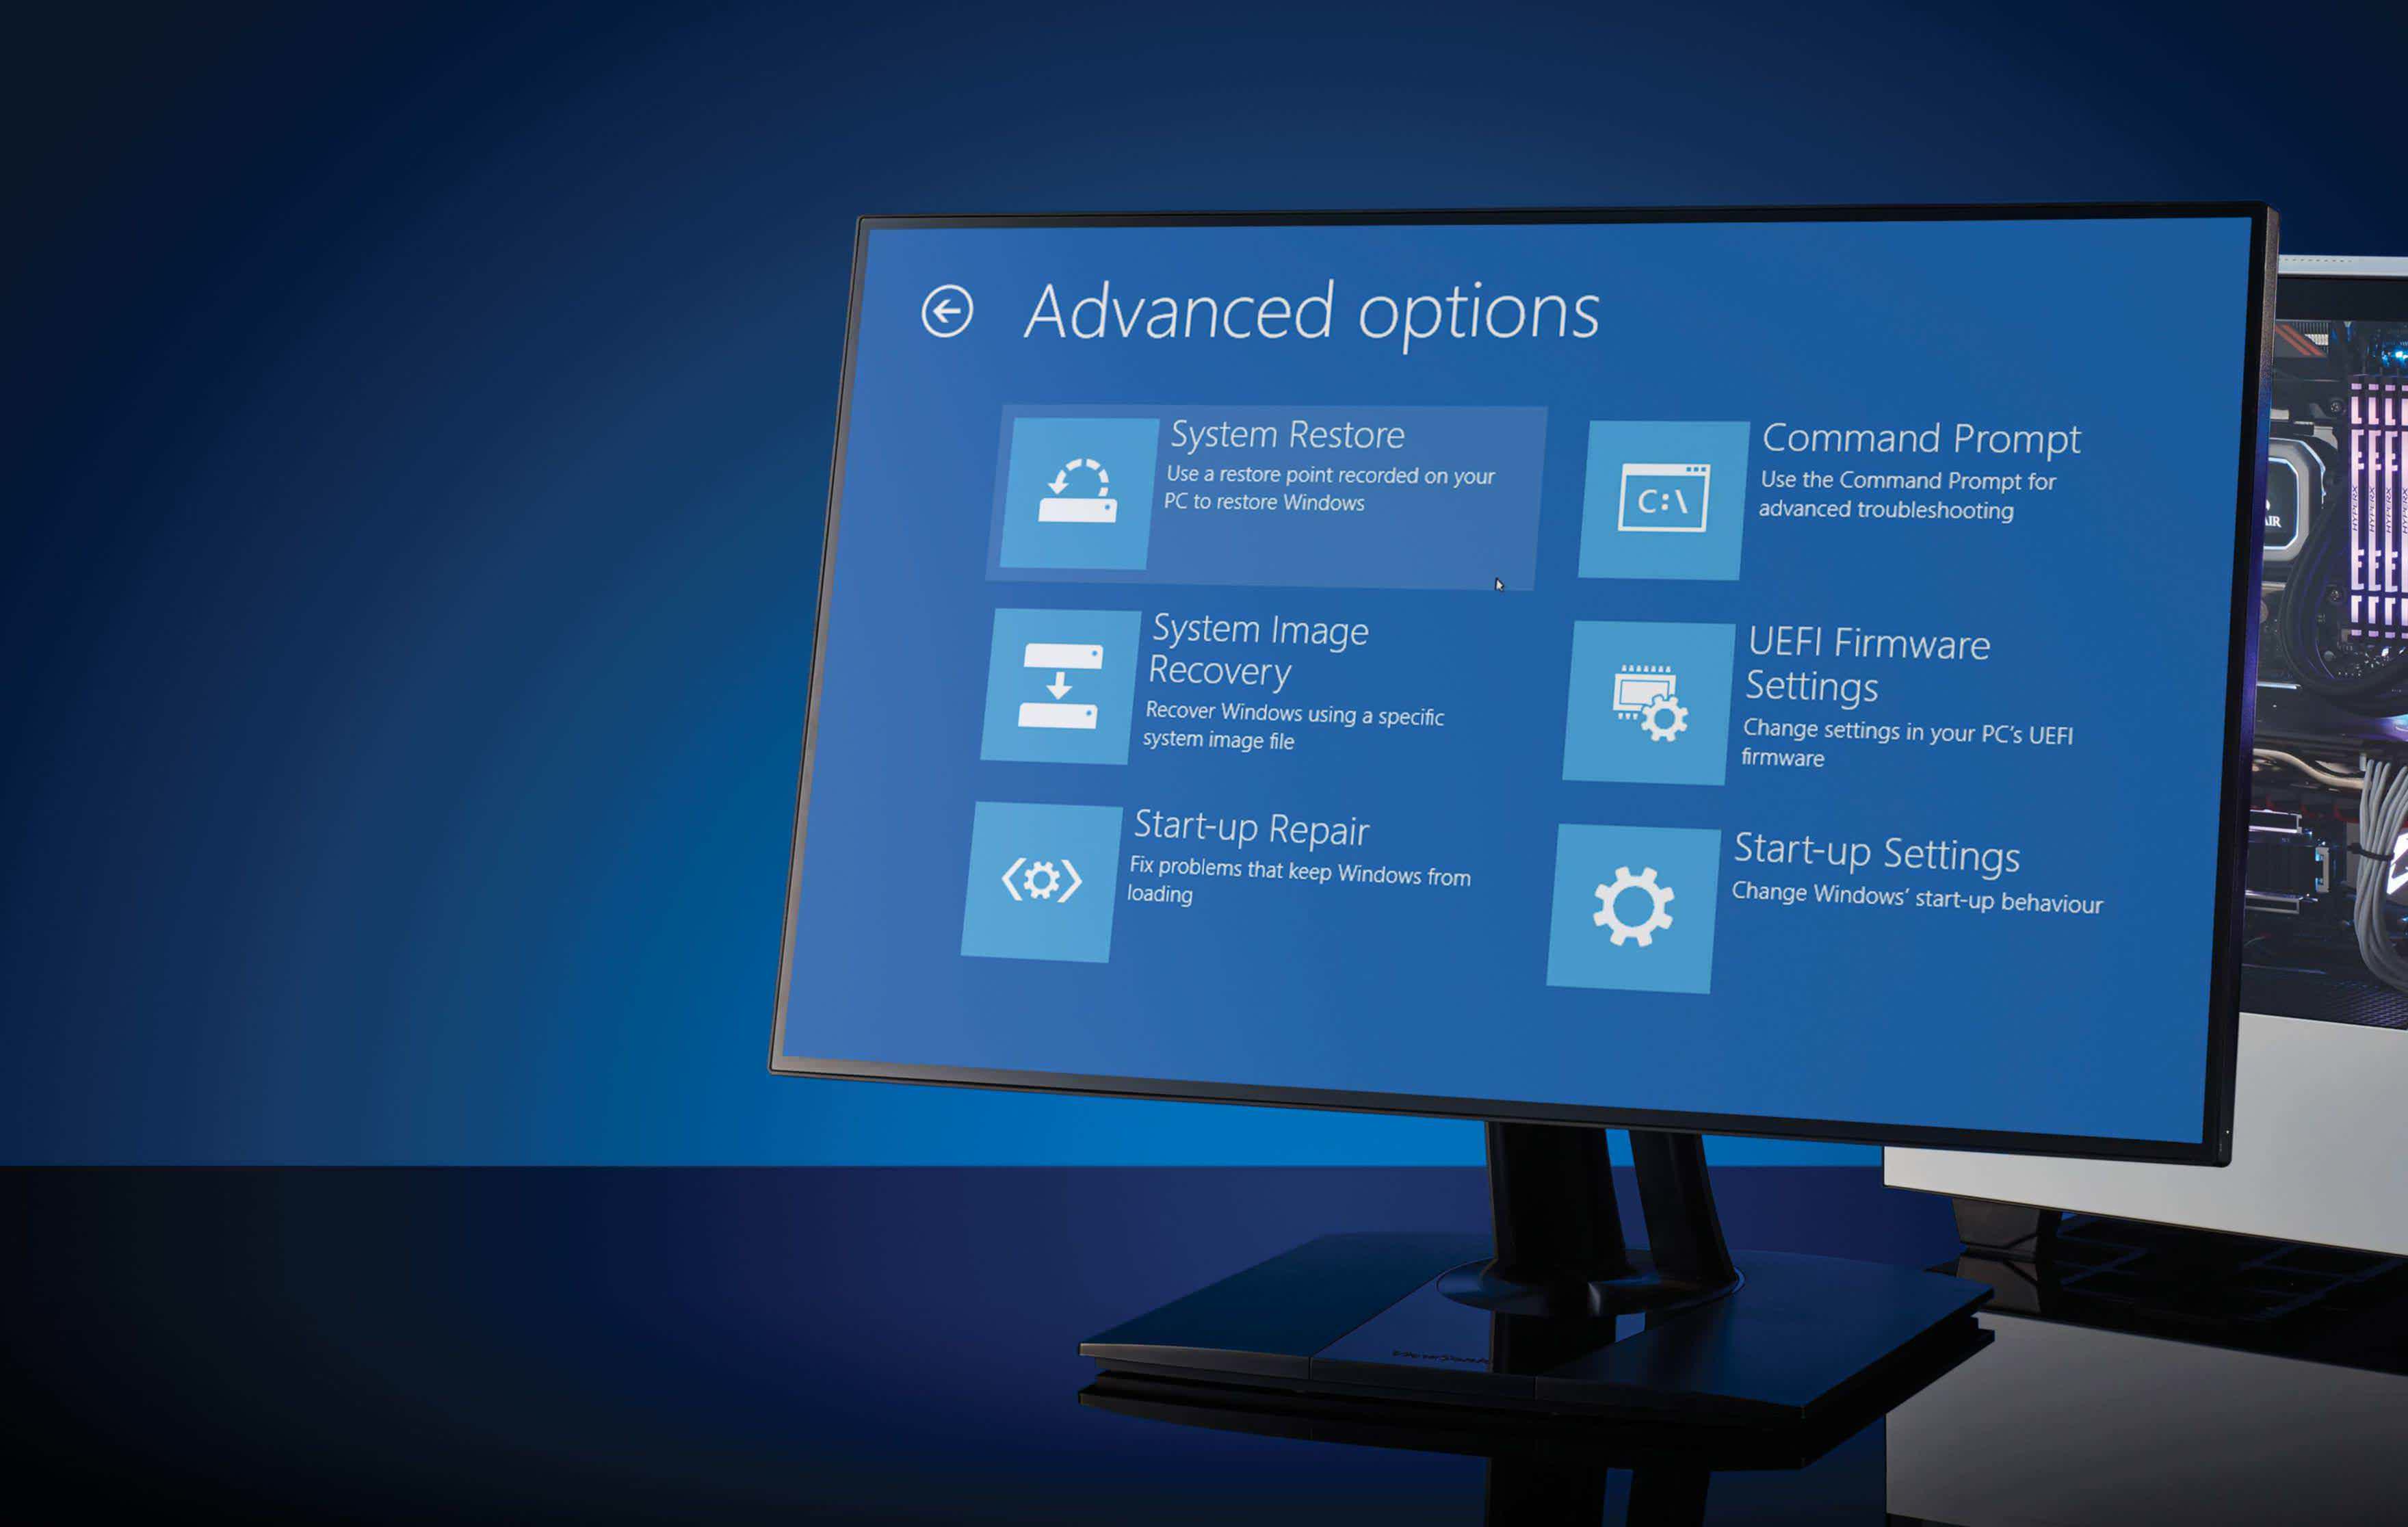 Microsoft tweaks the Windows 10 setup process with a new customization screen